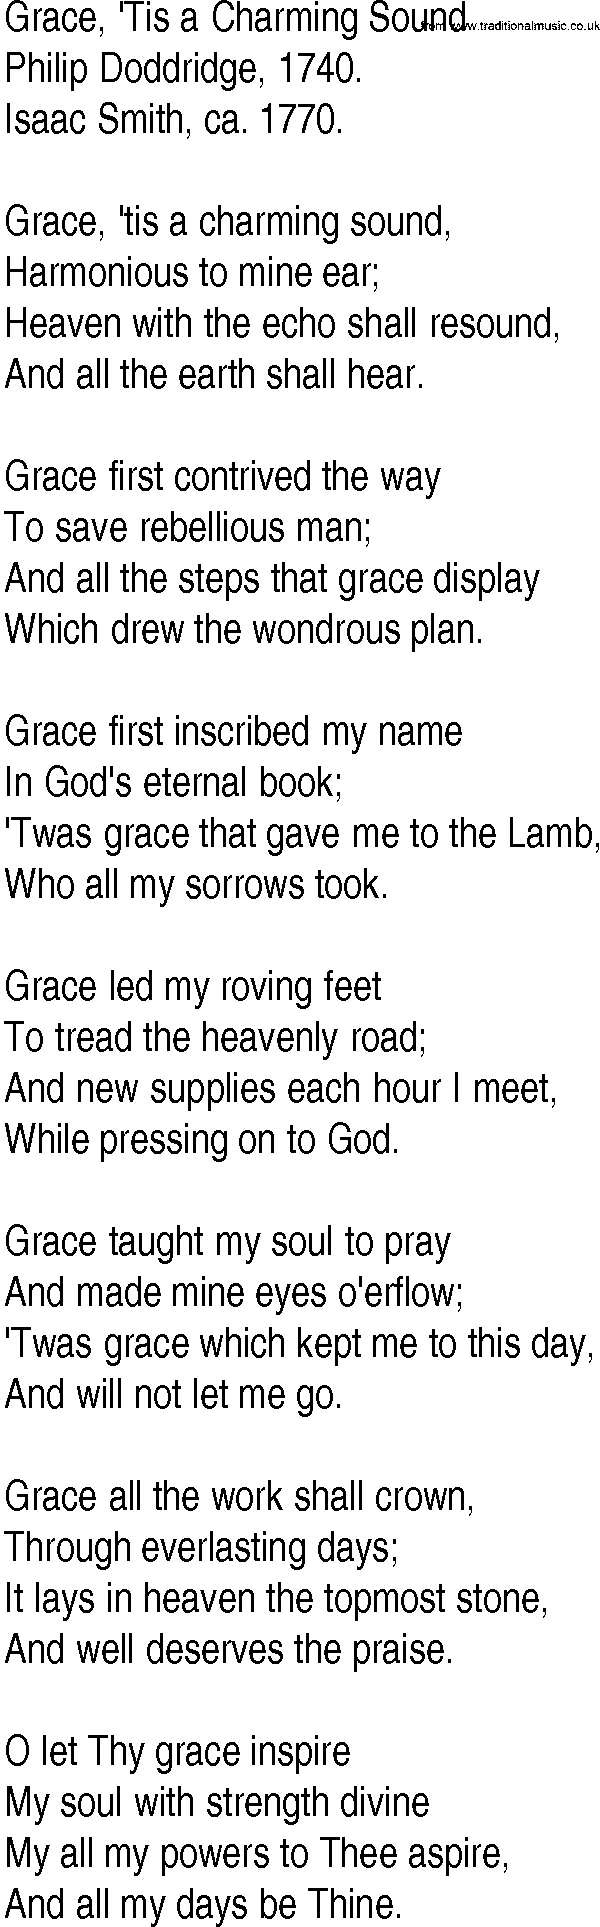 Hymn and Gospel Song: Grace, 'Tis a Charming Sound by Philip Doddridge lyrics